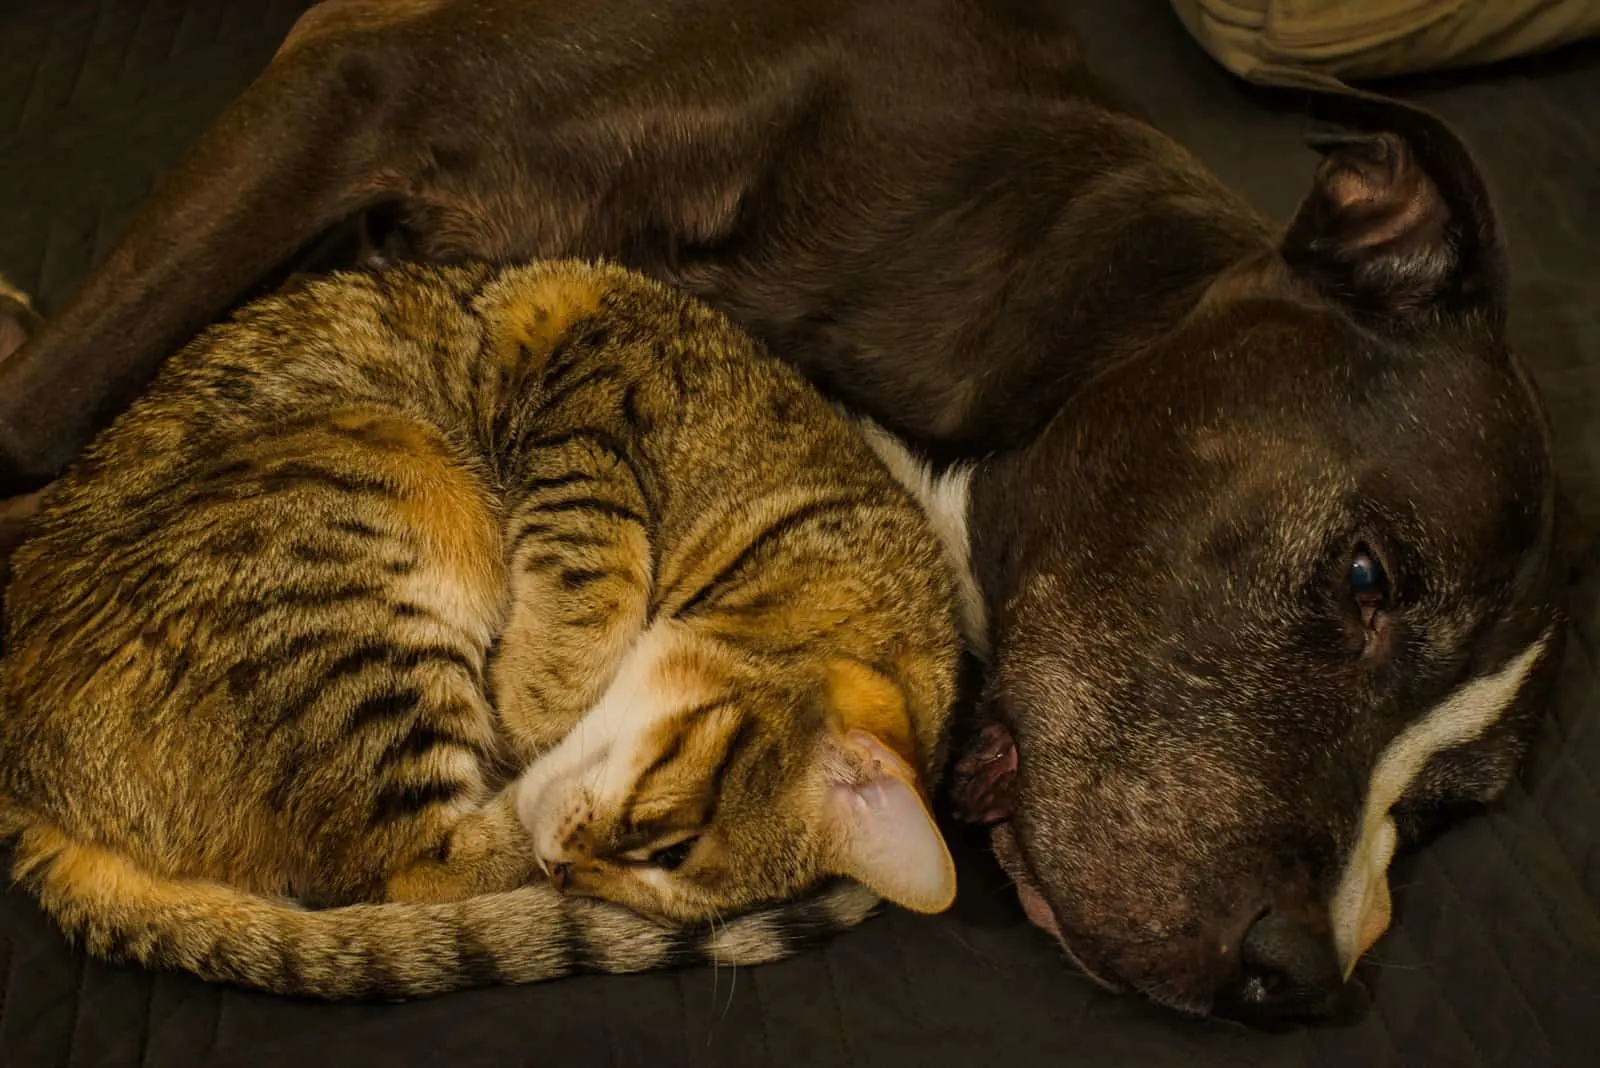 pitbull sleeping next to a cat